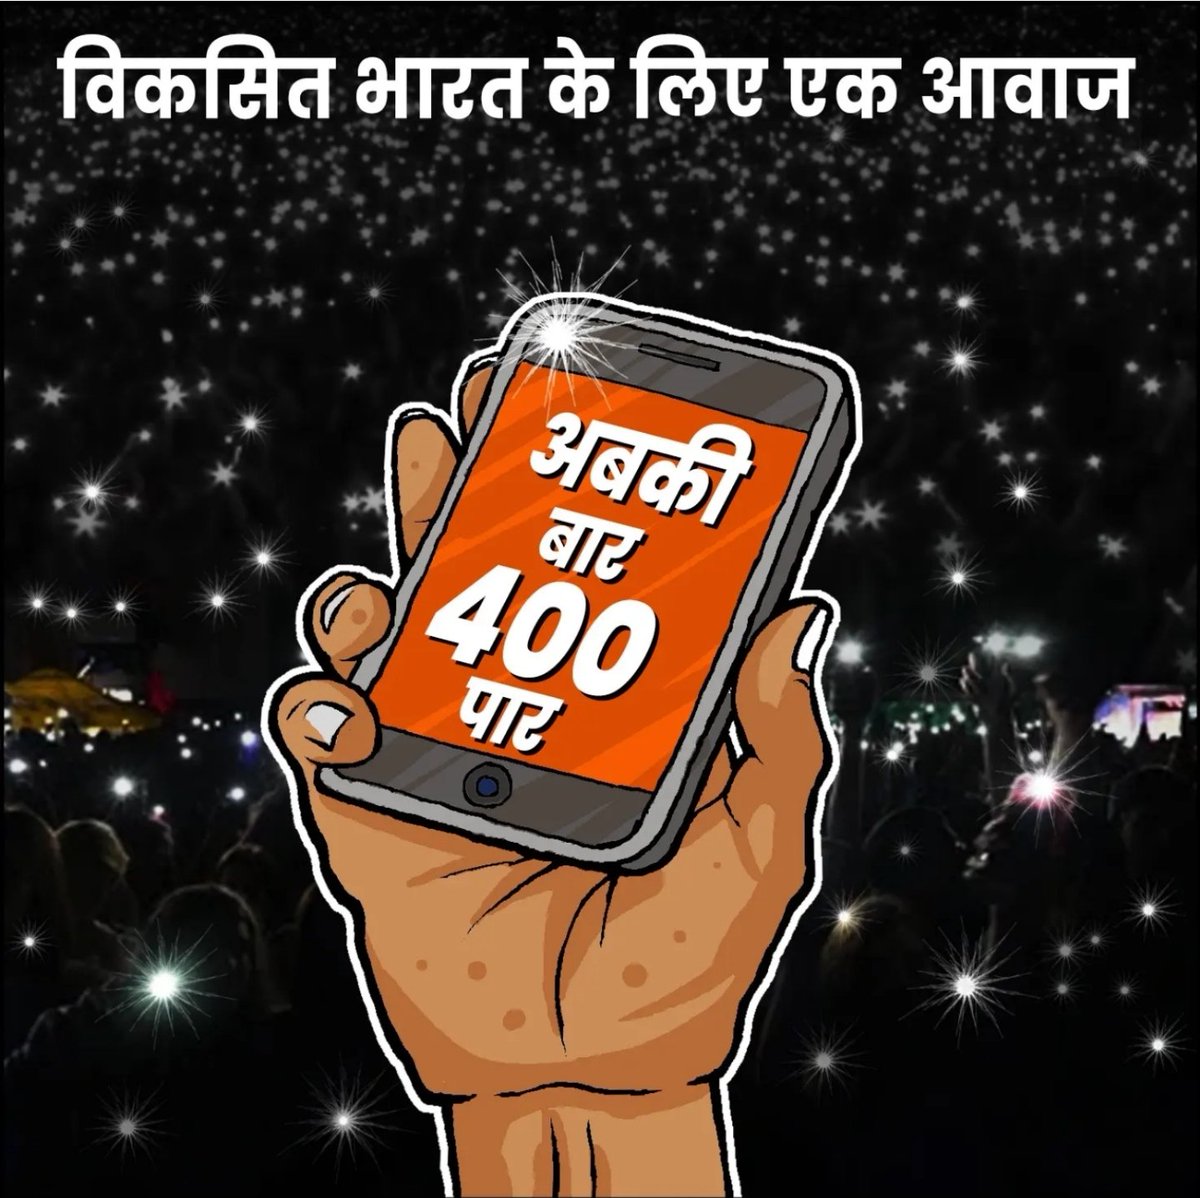 विकसित भारत के लिए..एक आवाज बने!

#LokSabhaElections2024
#ModiAgain2024
#AbkiBaar400Paar
#INDIAAlliance
#CongressMuktBharat
#EDRaid